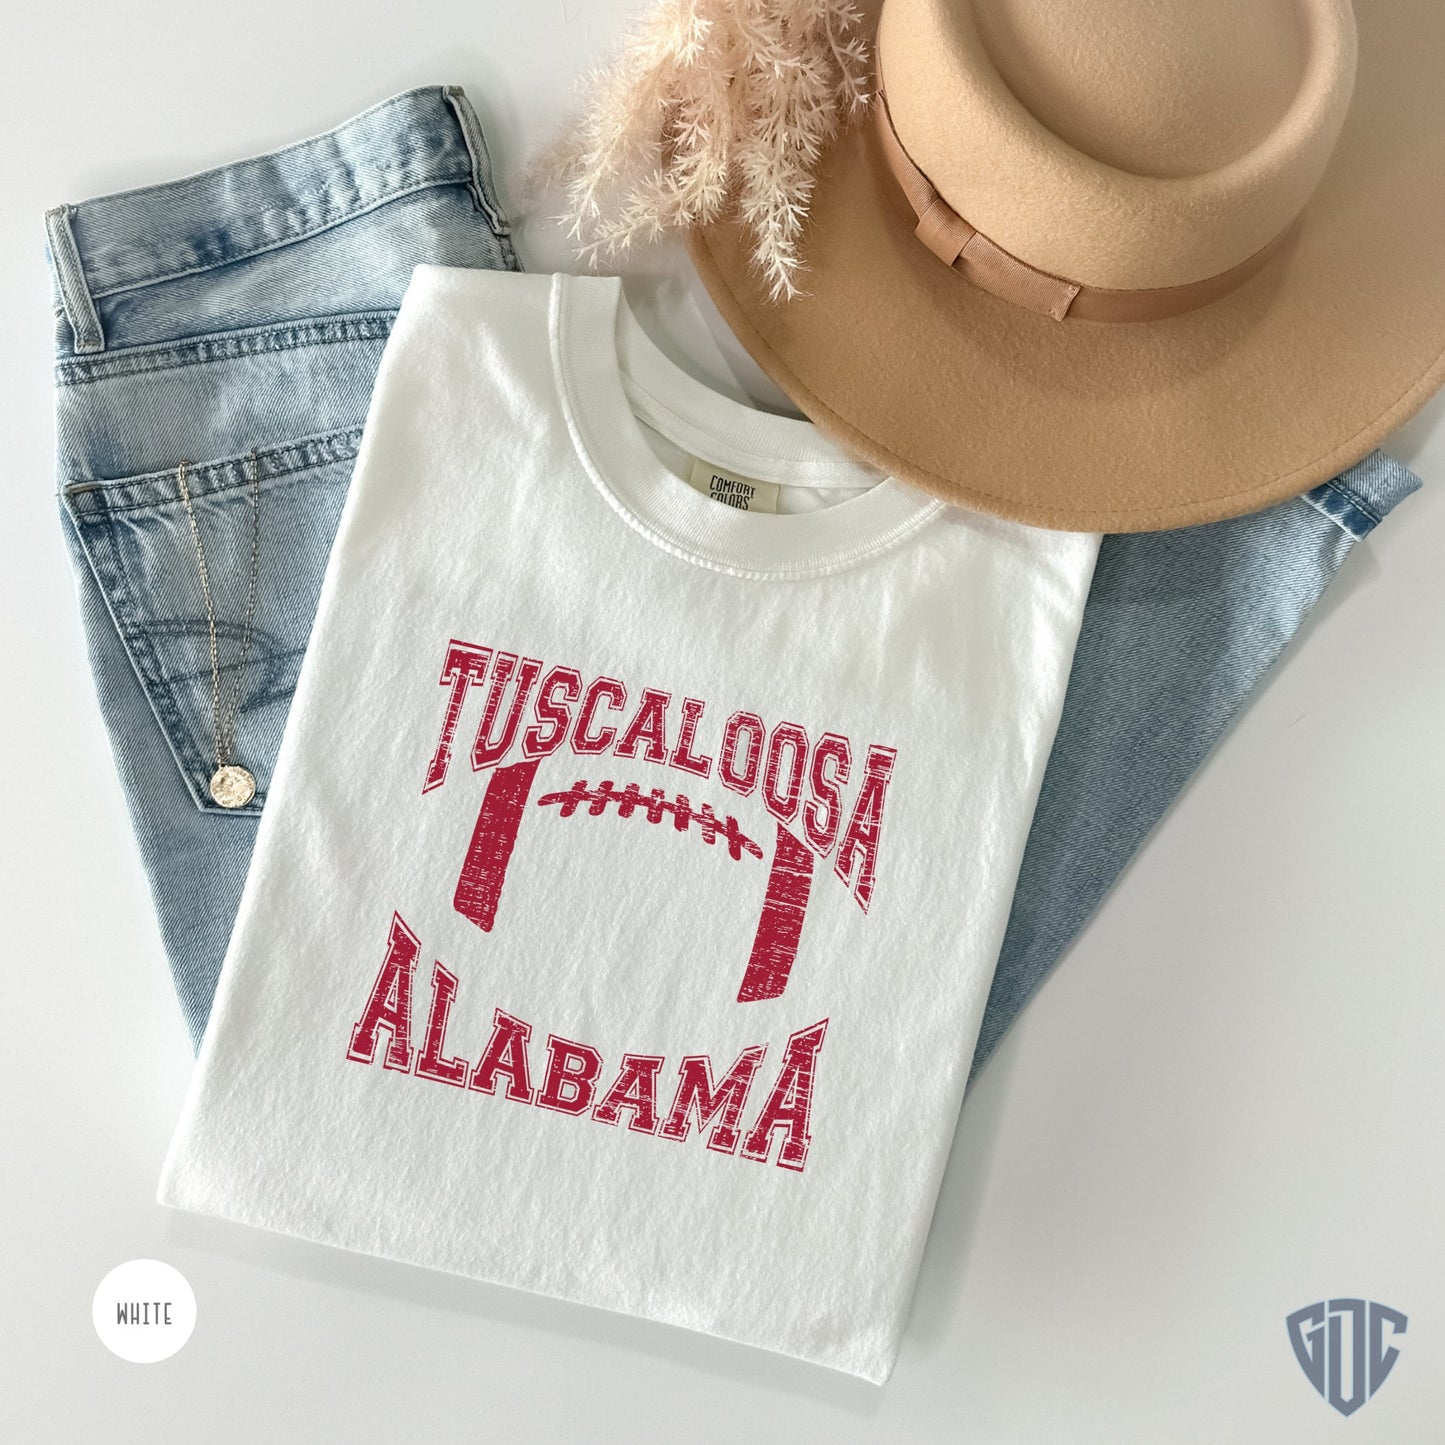 Tuscaloosa Alabama Football Comfort Colors Shirt, Vintage Tuscaloosa Alabama Shirt, Tuscaloosa Shirt